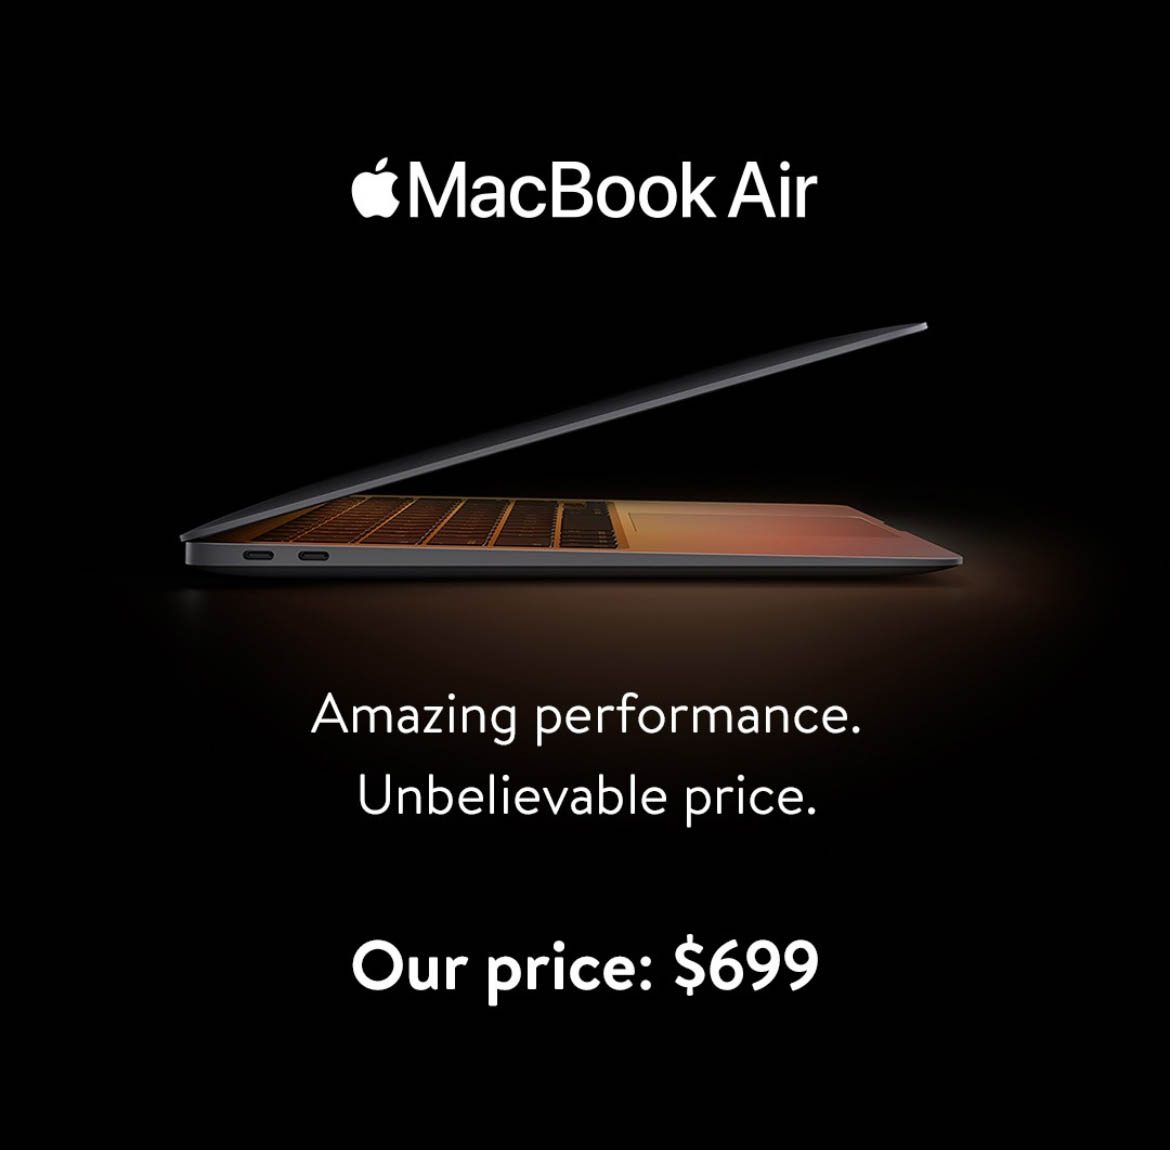 Apple MacBook Air 13.3-inch Laptop $699